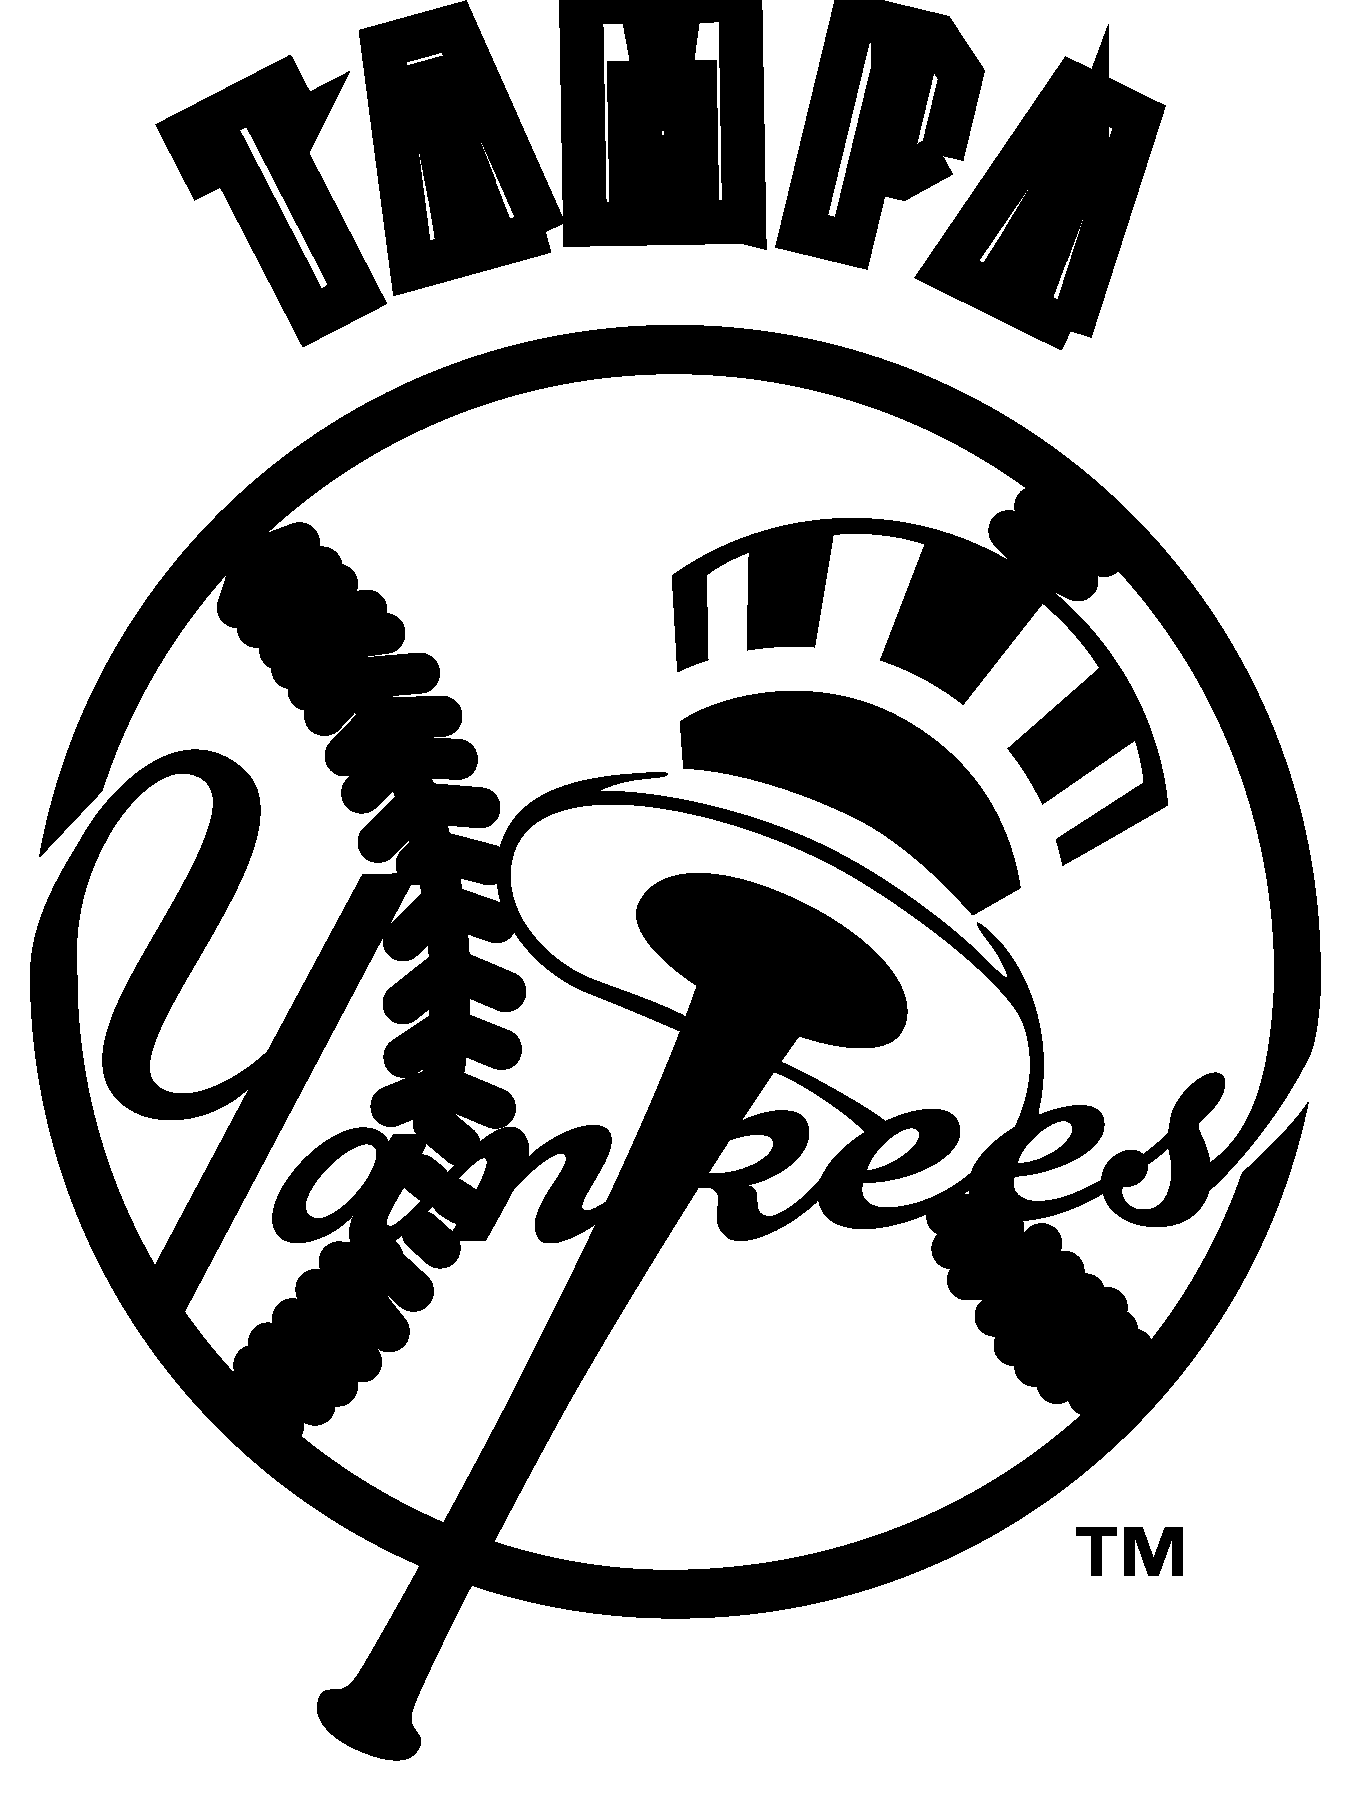 Tampa Bay Lightning Logo PNG Vector (SVG) Free Download